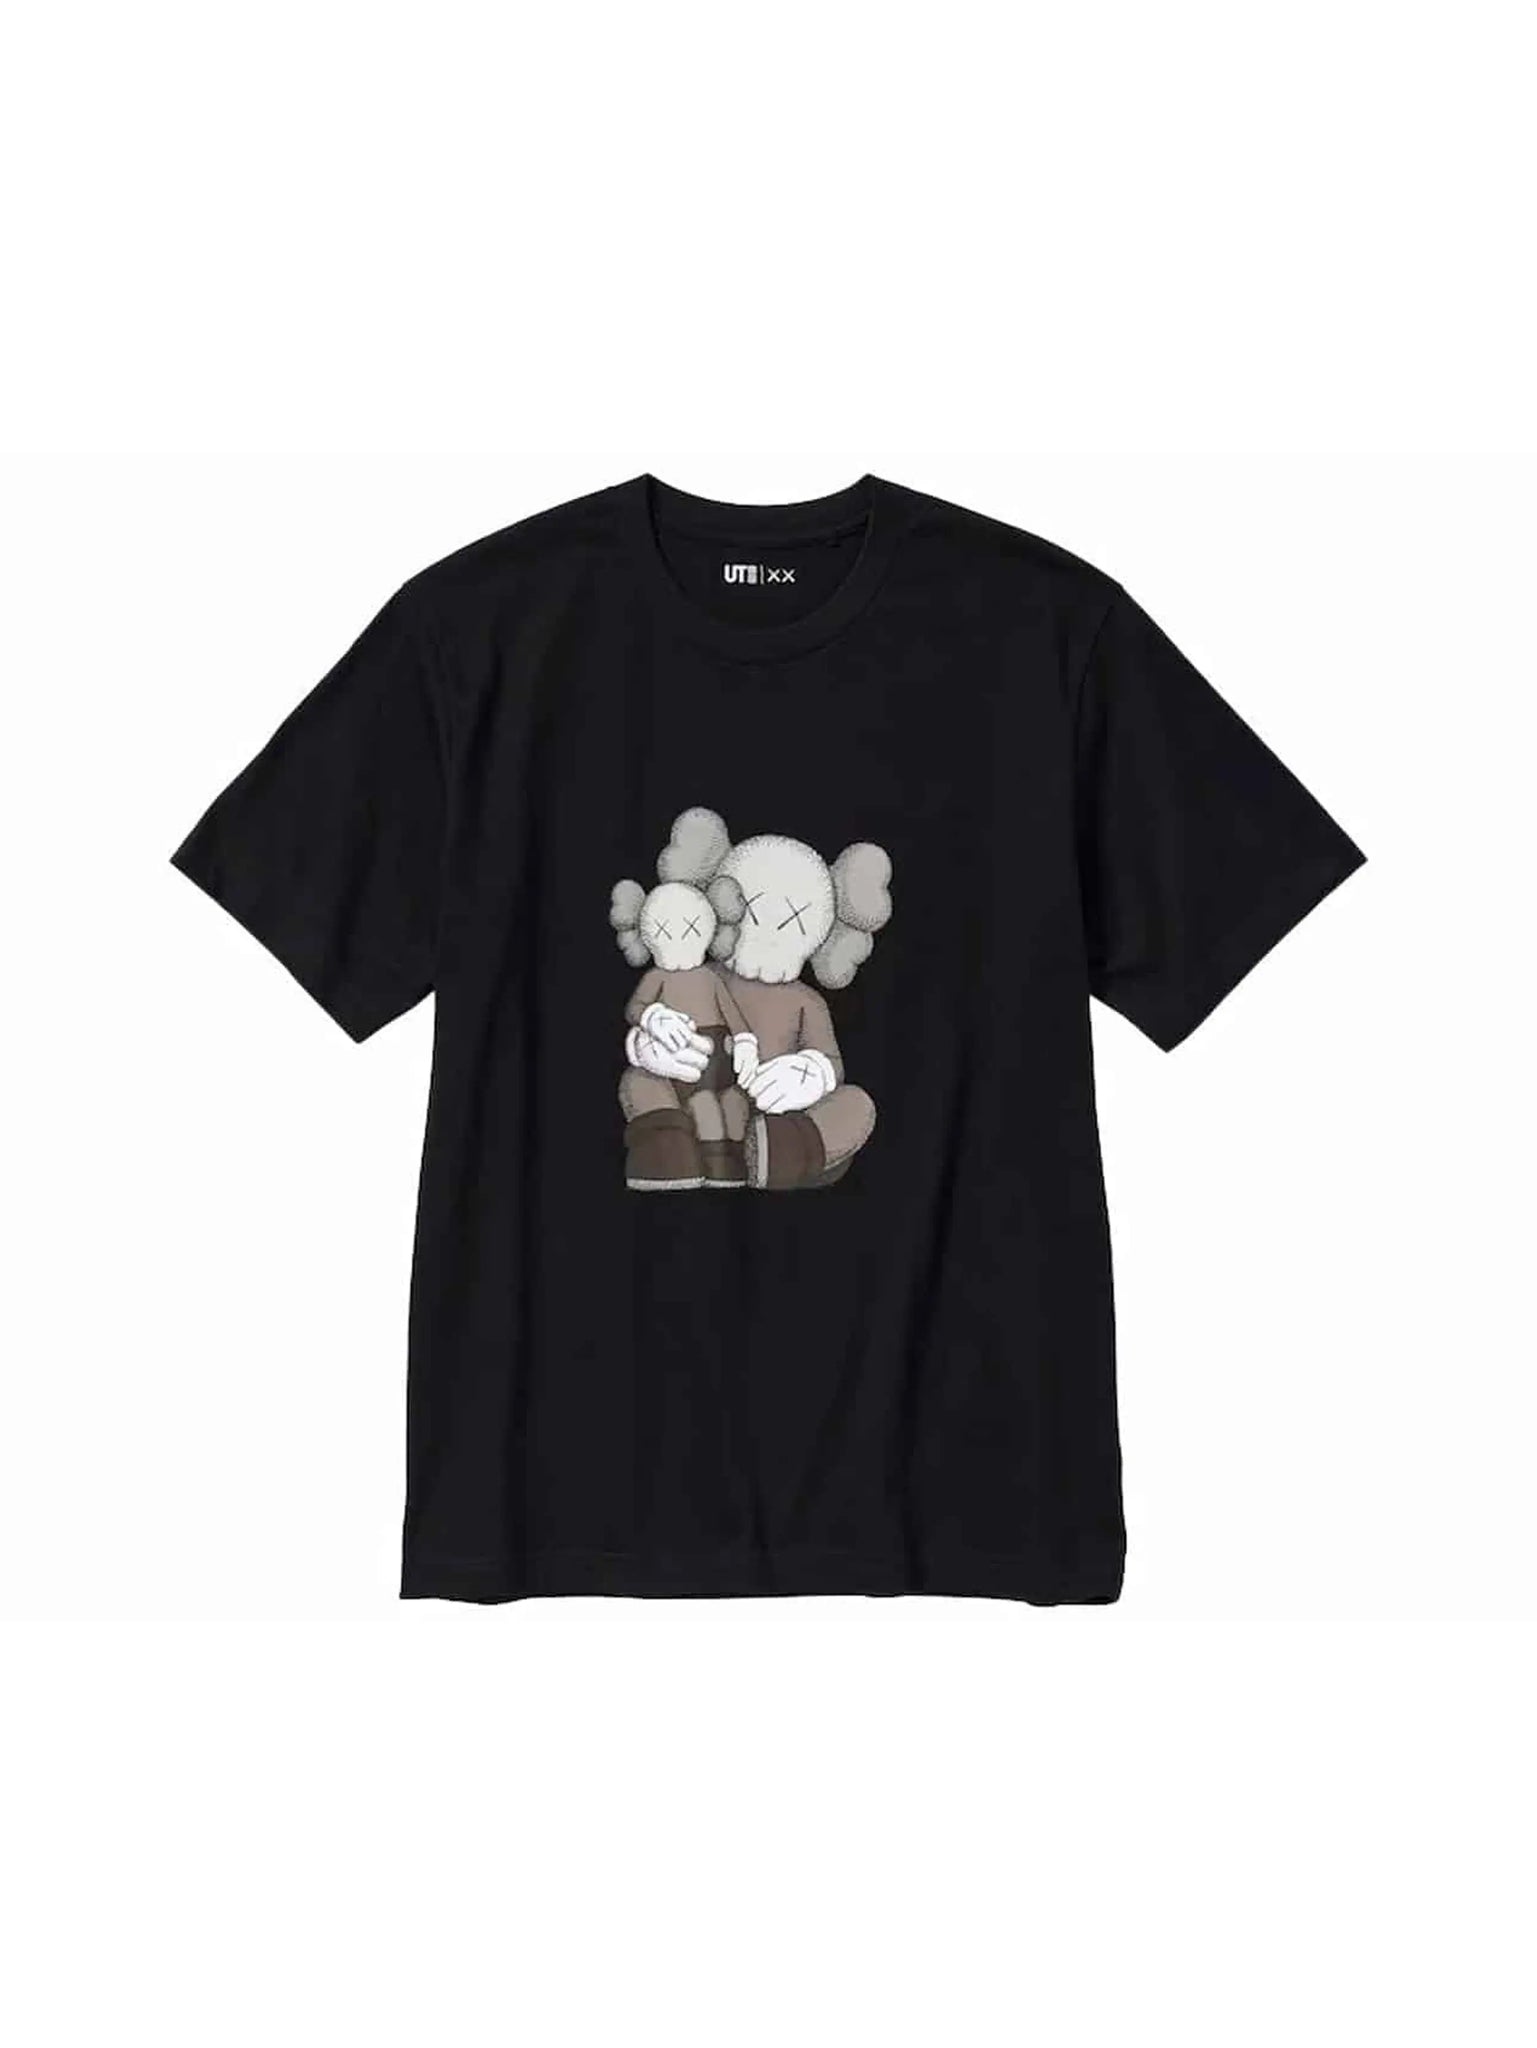 KAWS x Uniqlo UT Short Sleeve Graphic T-shirt Black in Melbourne, Australia - Prior